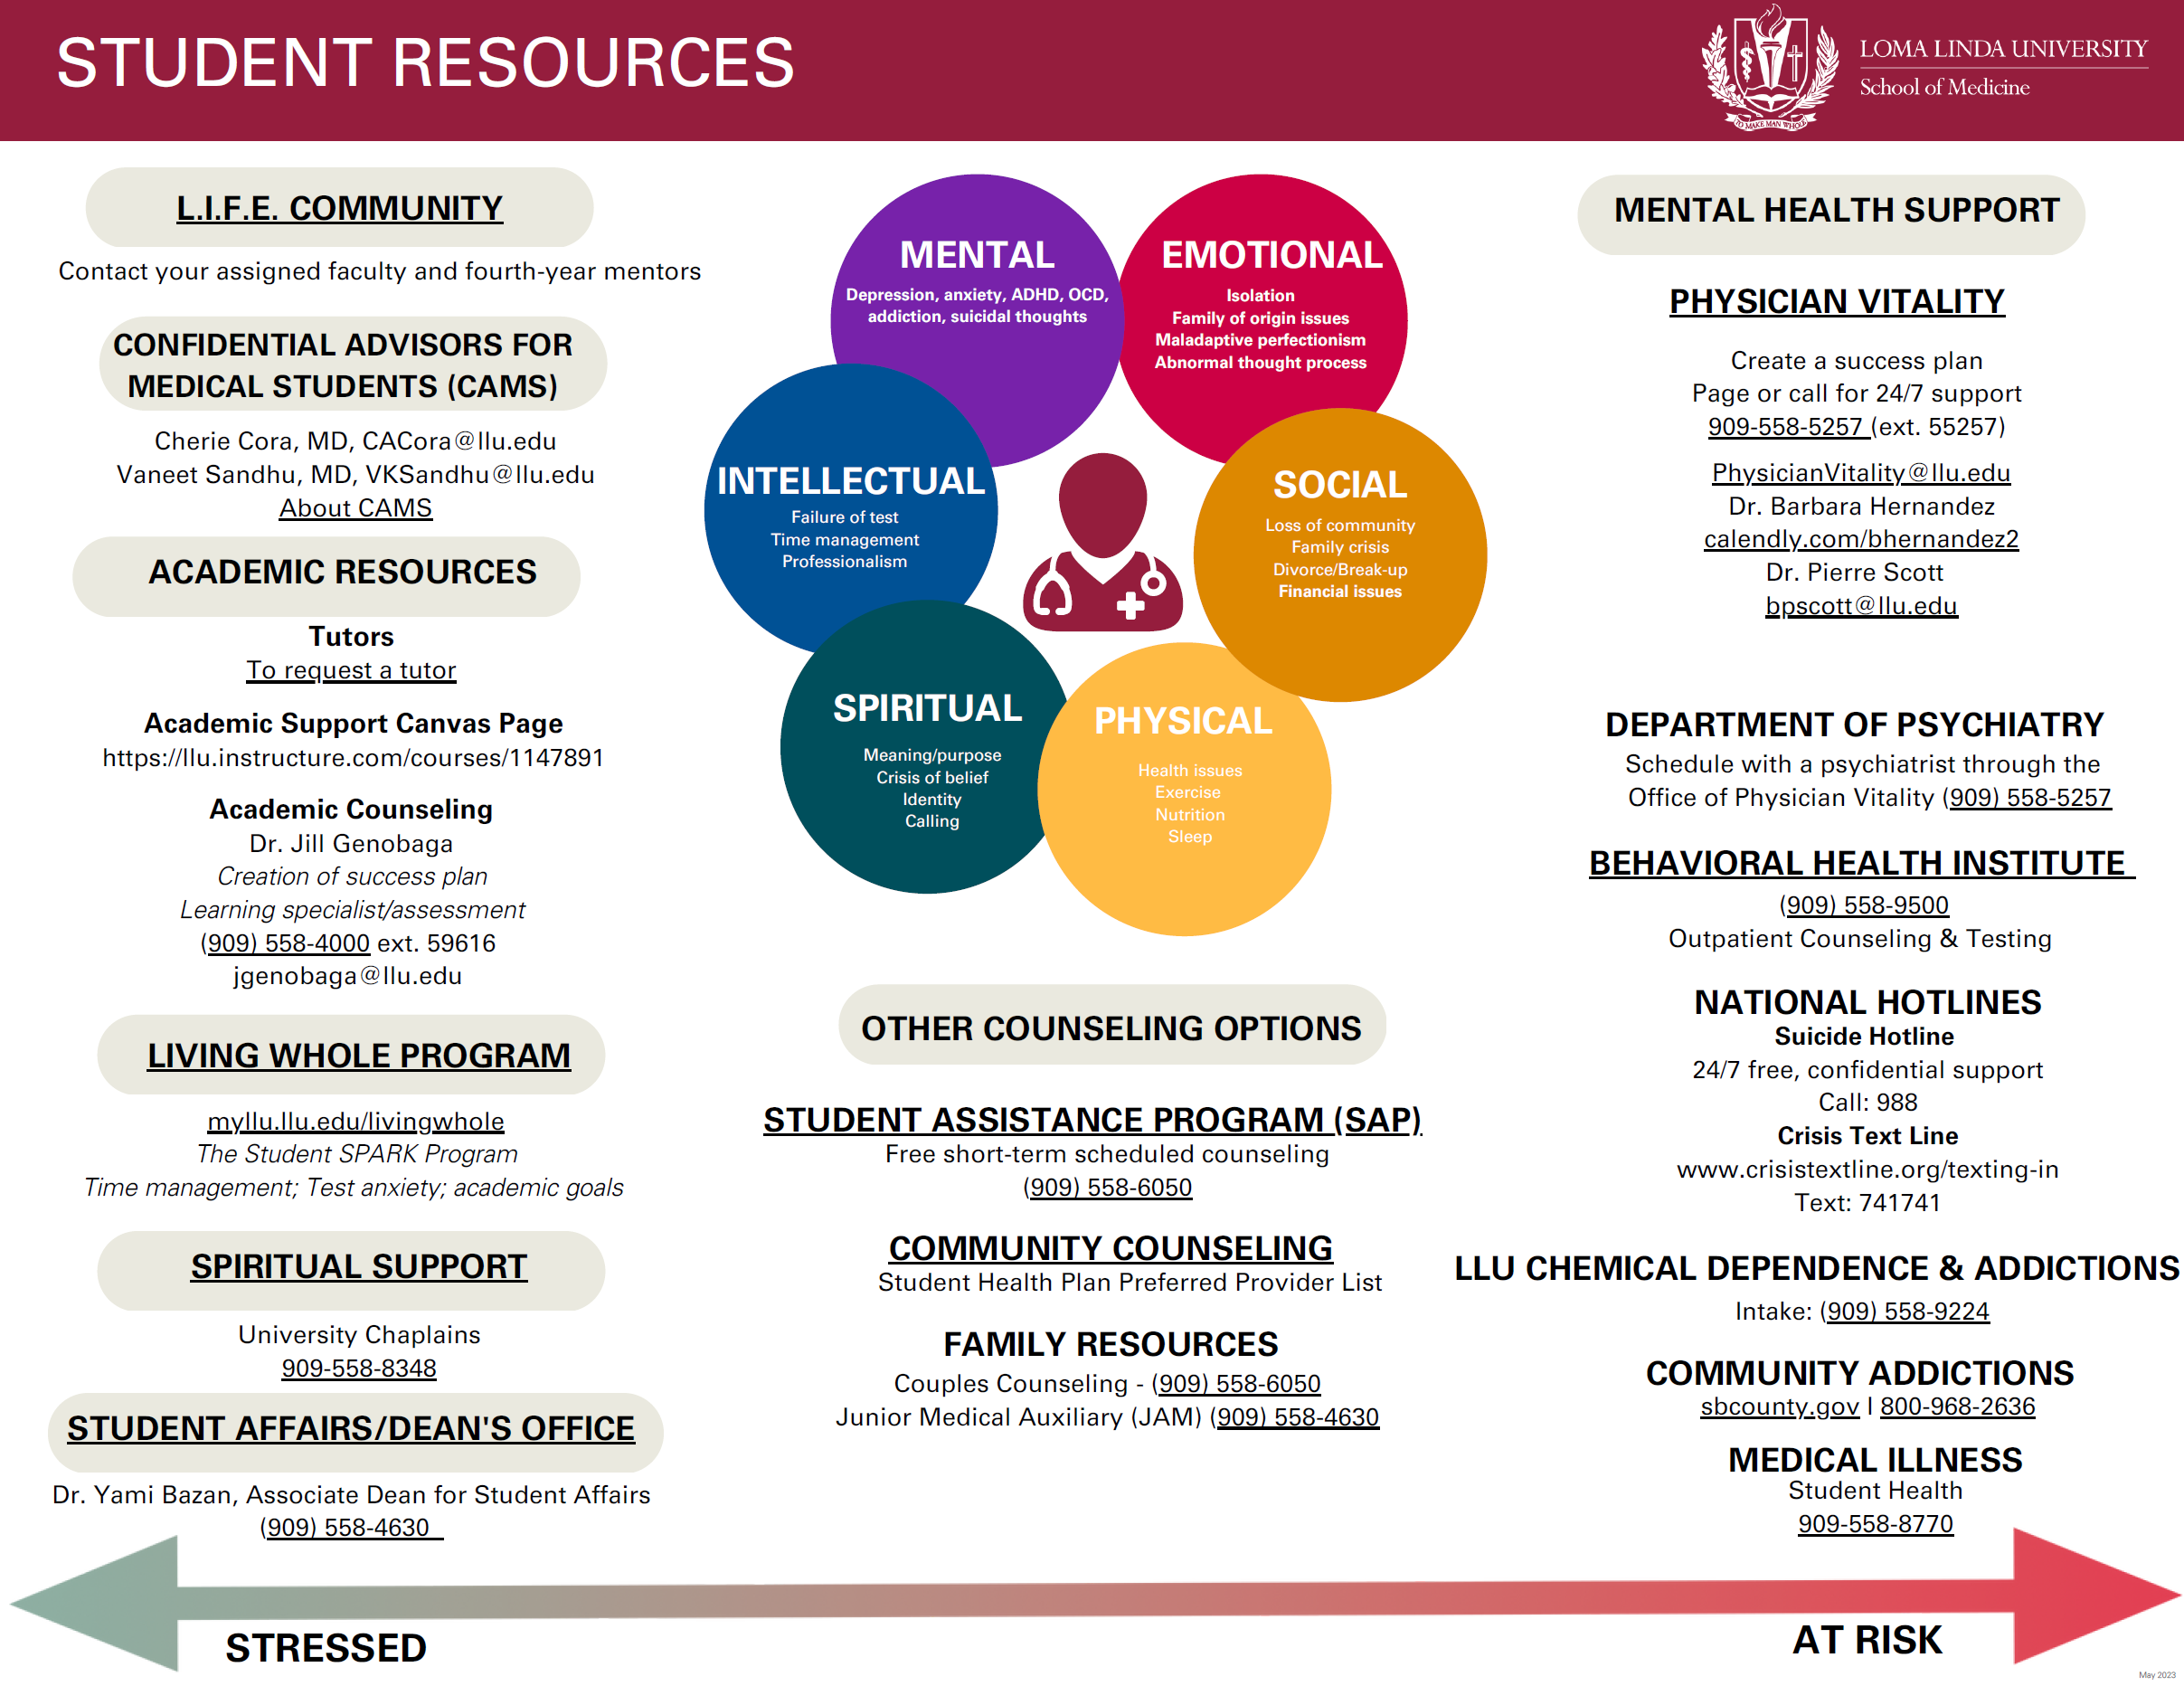 Student Resource Graphic